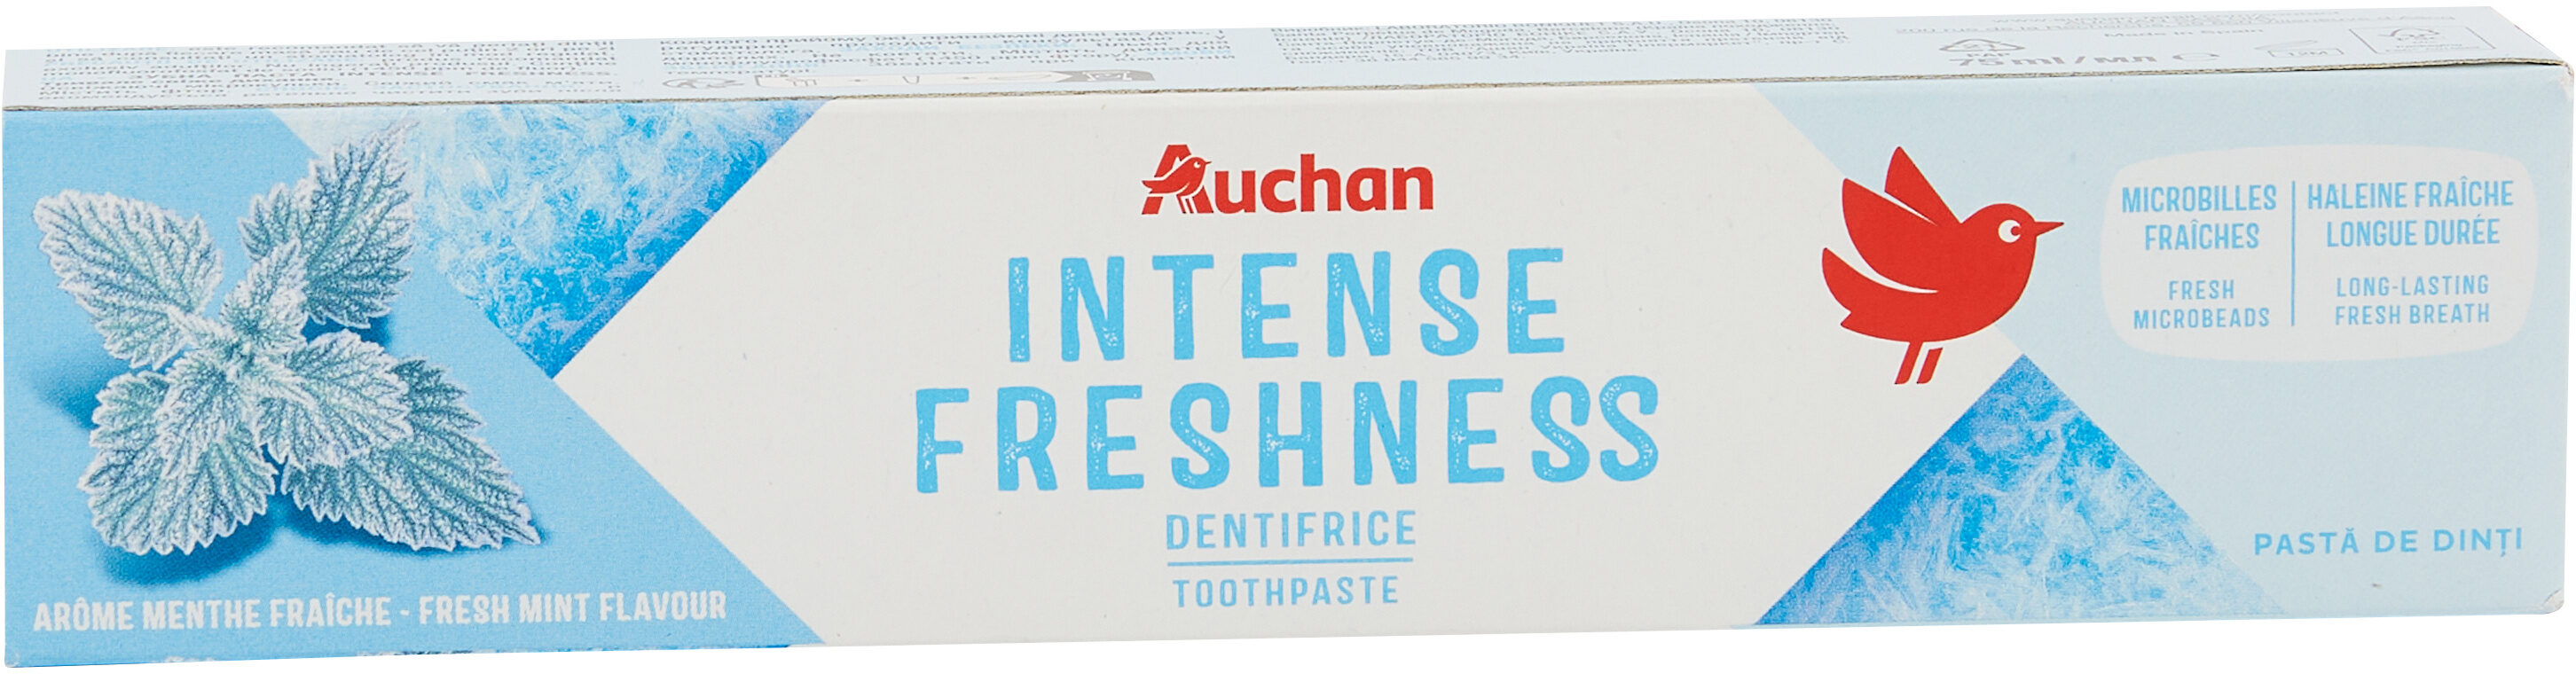 Auchan dentifrice fraîcheur intense tube 75ml - Produto - fr